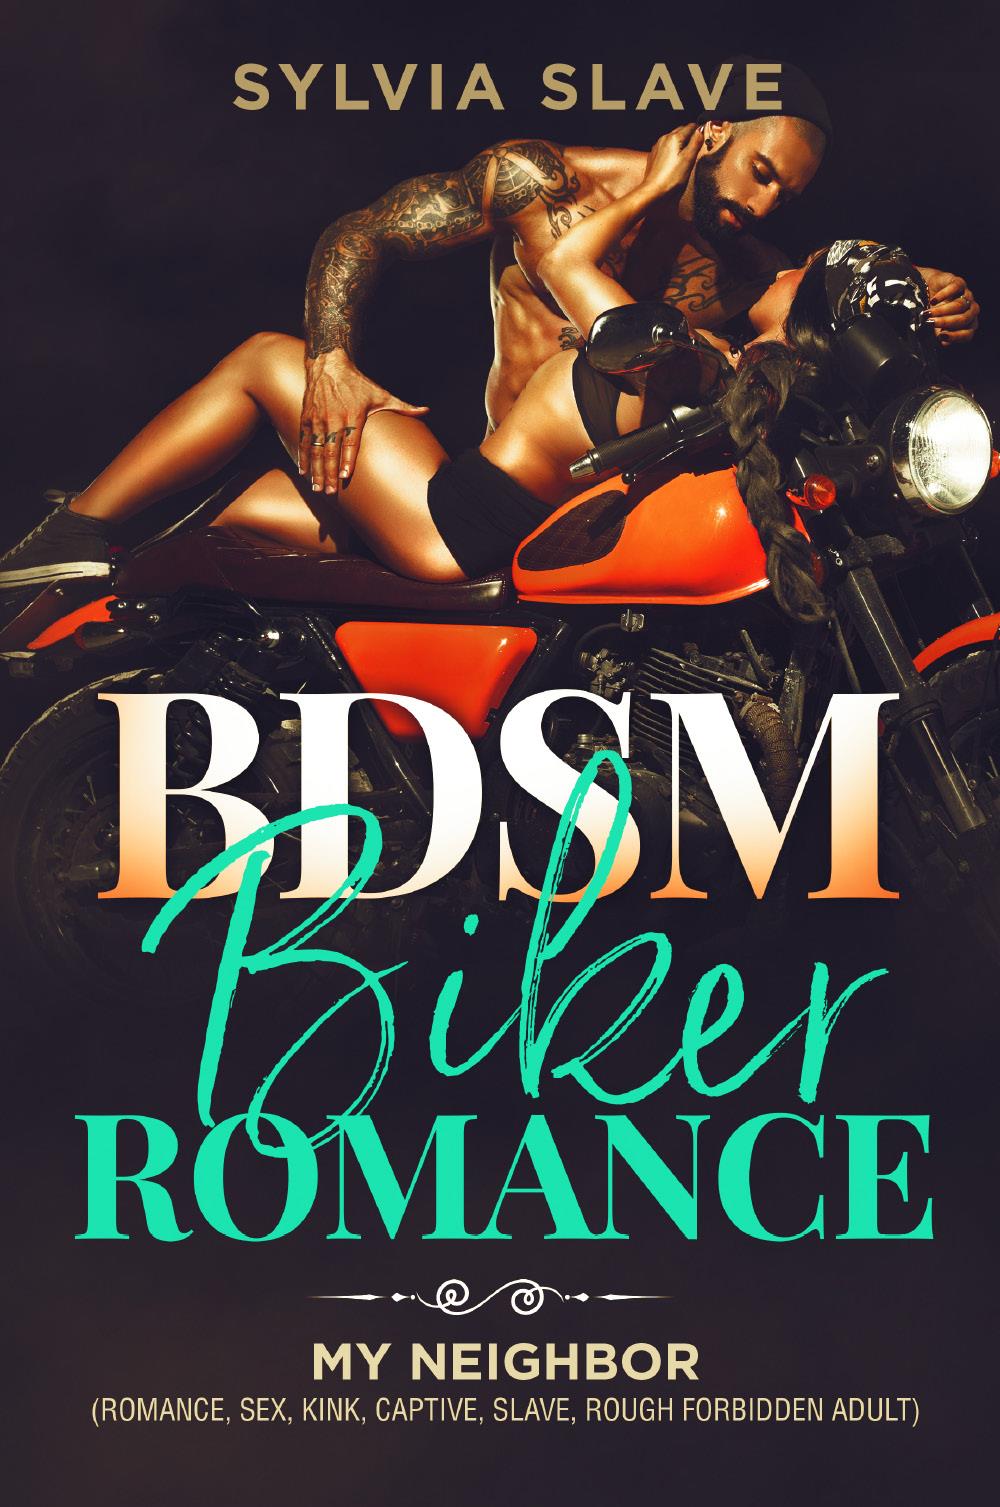 Bsdm Biker Romance. MY NEIGHBOR (ROMANCE, SEX, KINK, CAPTIVE, SLAVE, ROUGH FORBIDDEN ADULT)